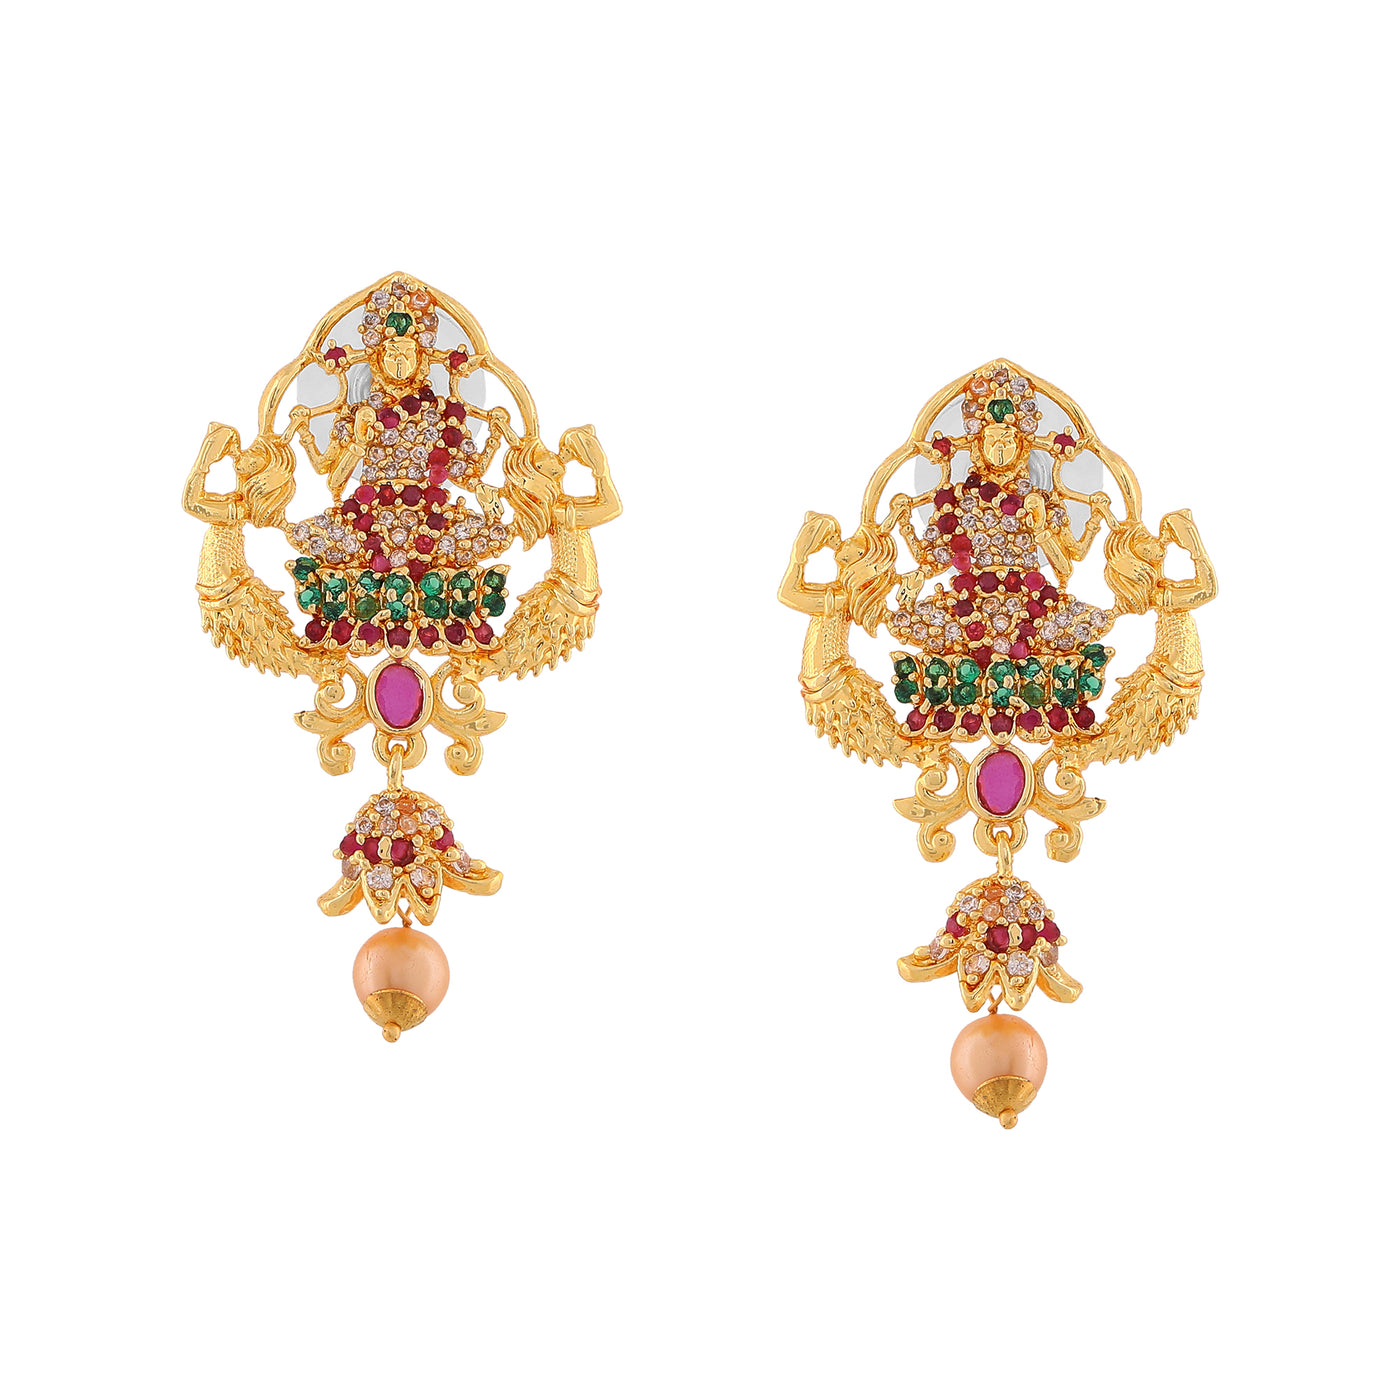 Estele Gold Plated CZ Lakshmi Devi Designer Bridal Necklace Set for Women